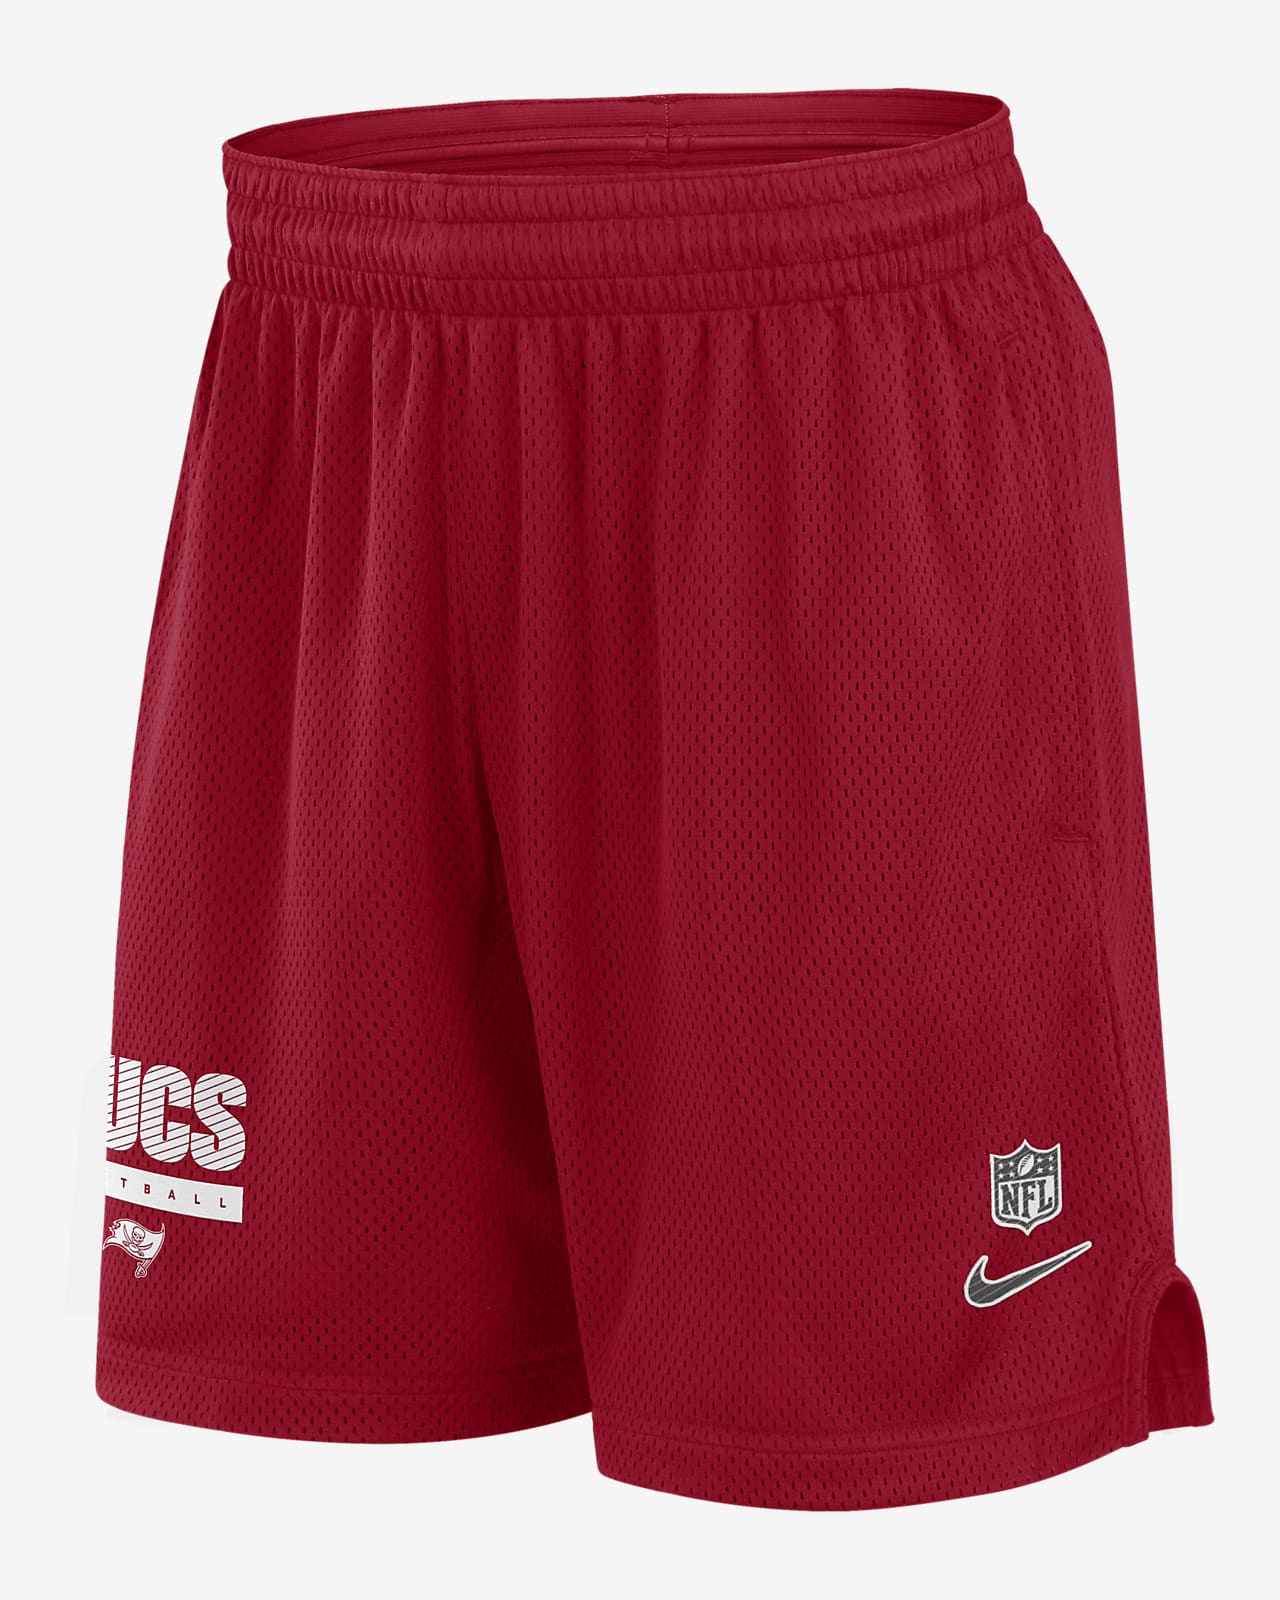 Tampa Bay Buccaneers Sideline Men's Nike Dri-FIT NFL Shorts